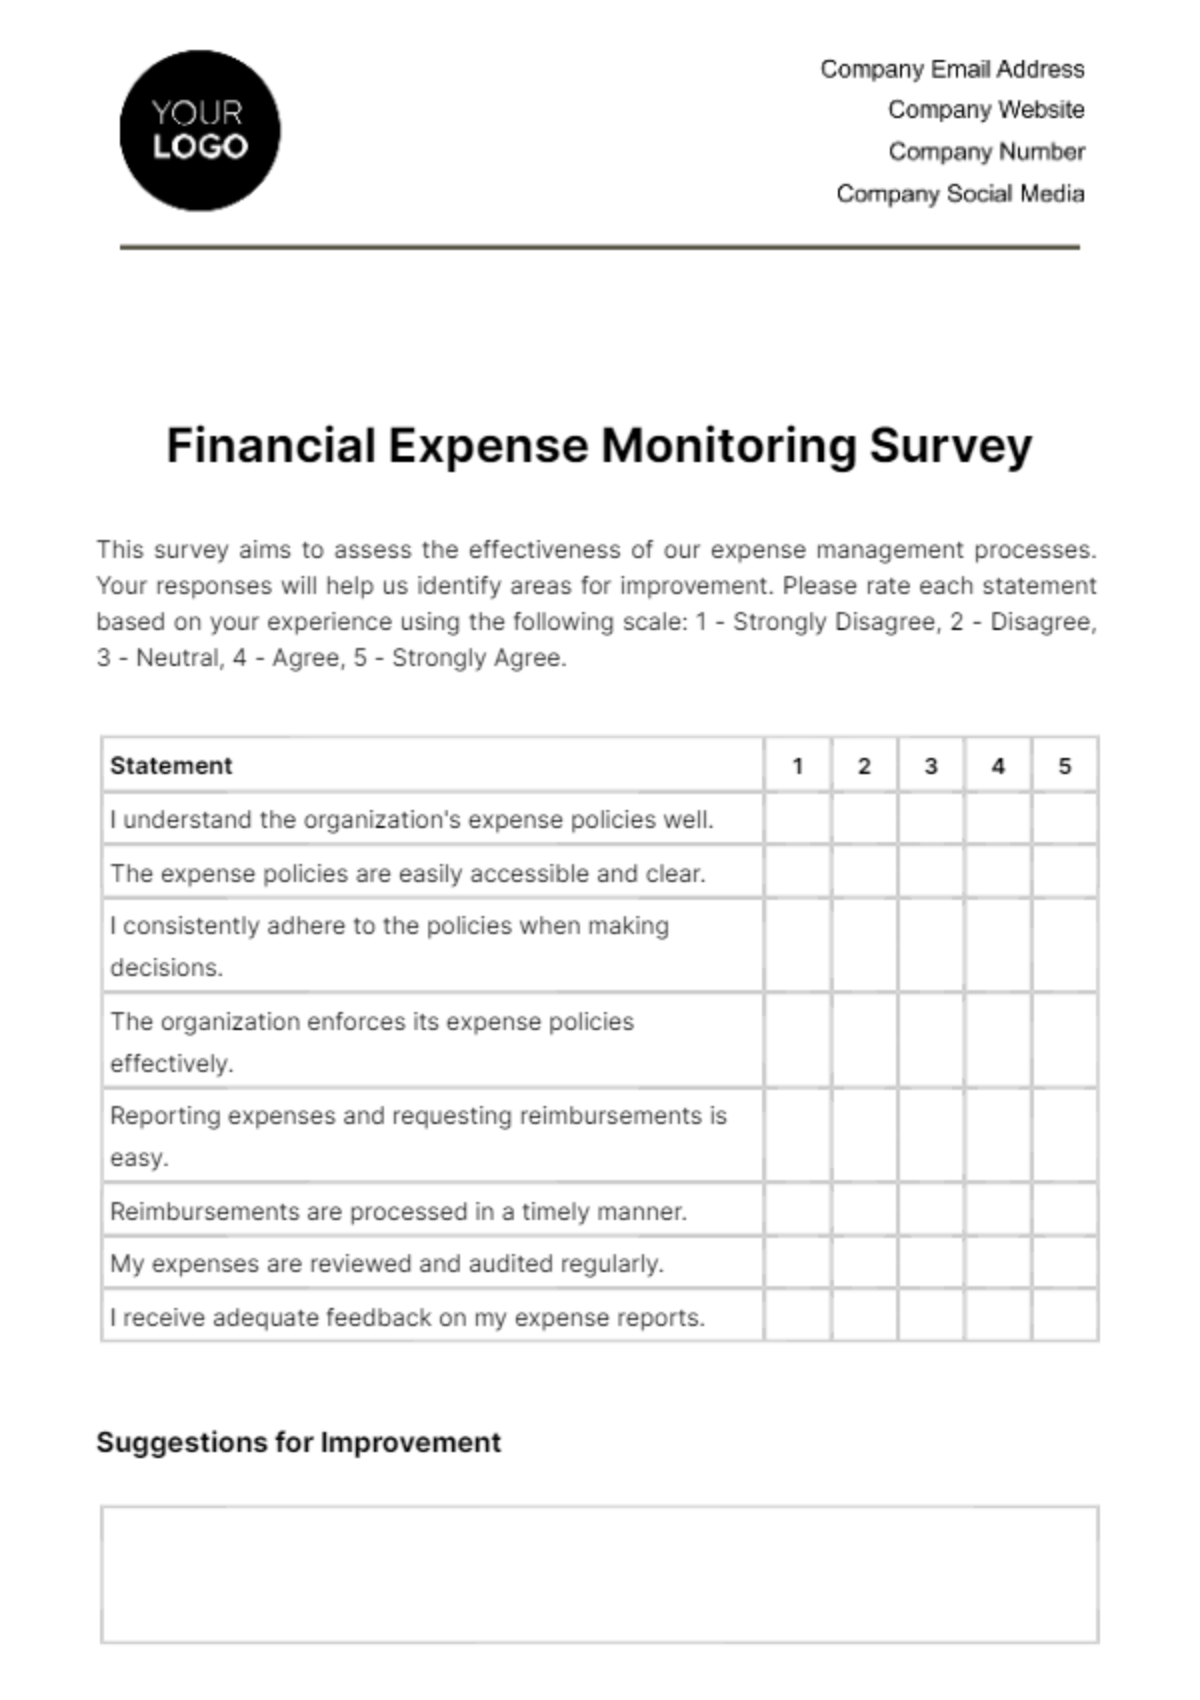 Free Financial Expense Monitoring Survey Template